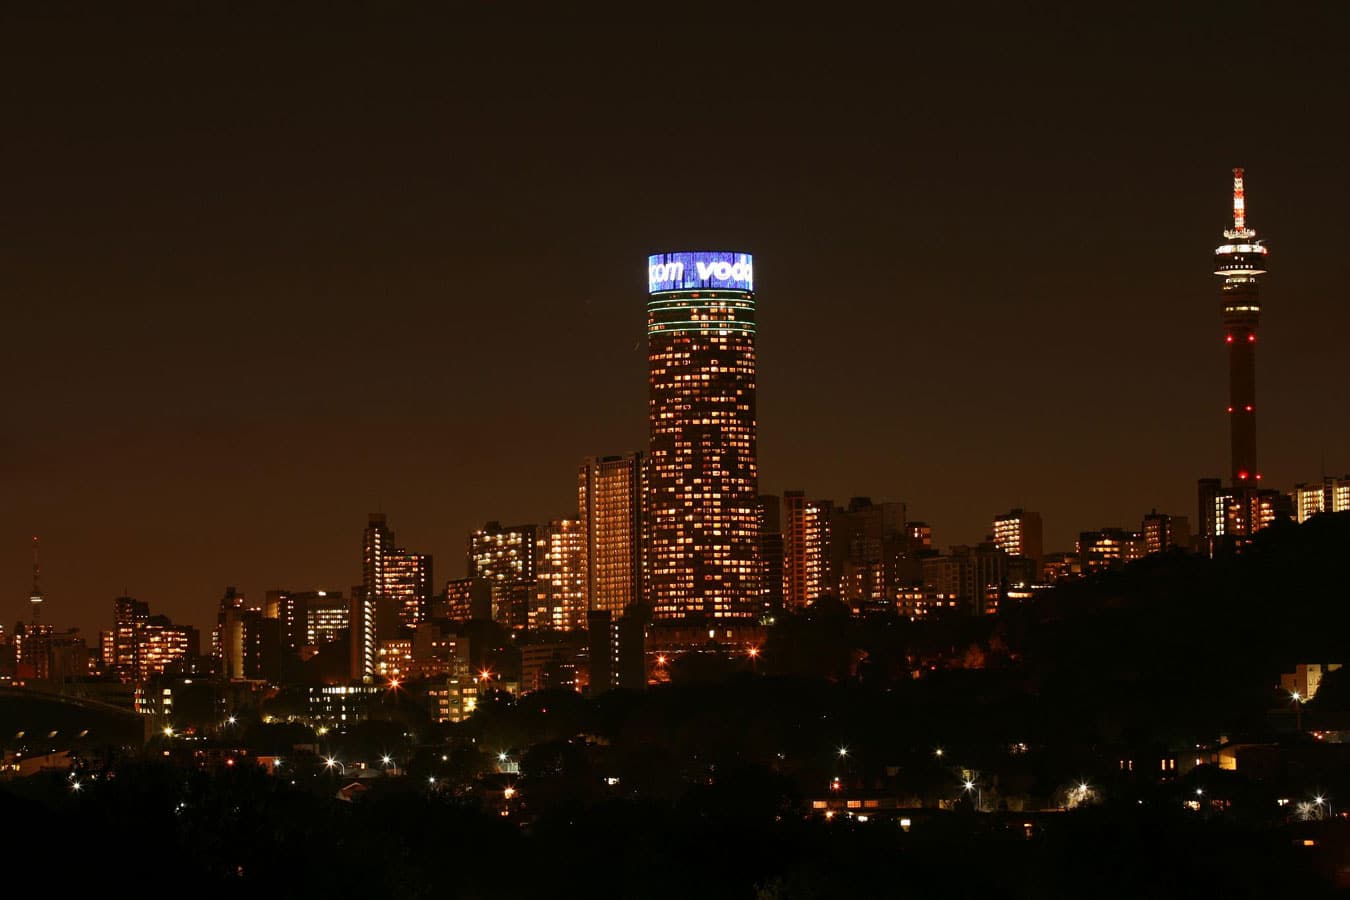 Johannesburg skyline at night Photo by Nico Roets